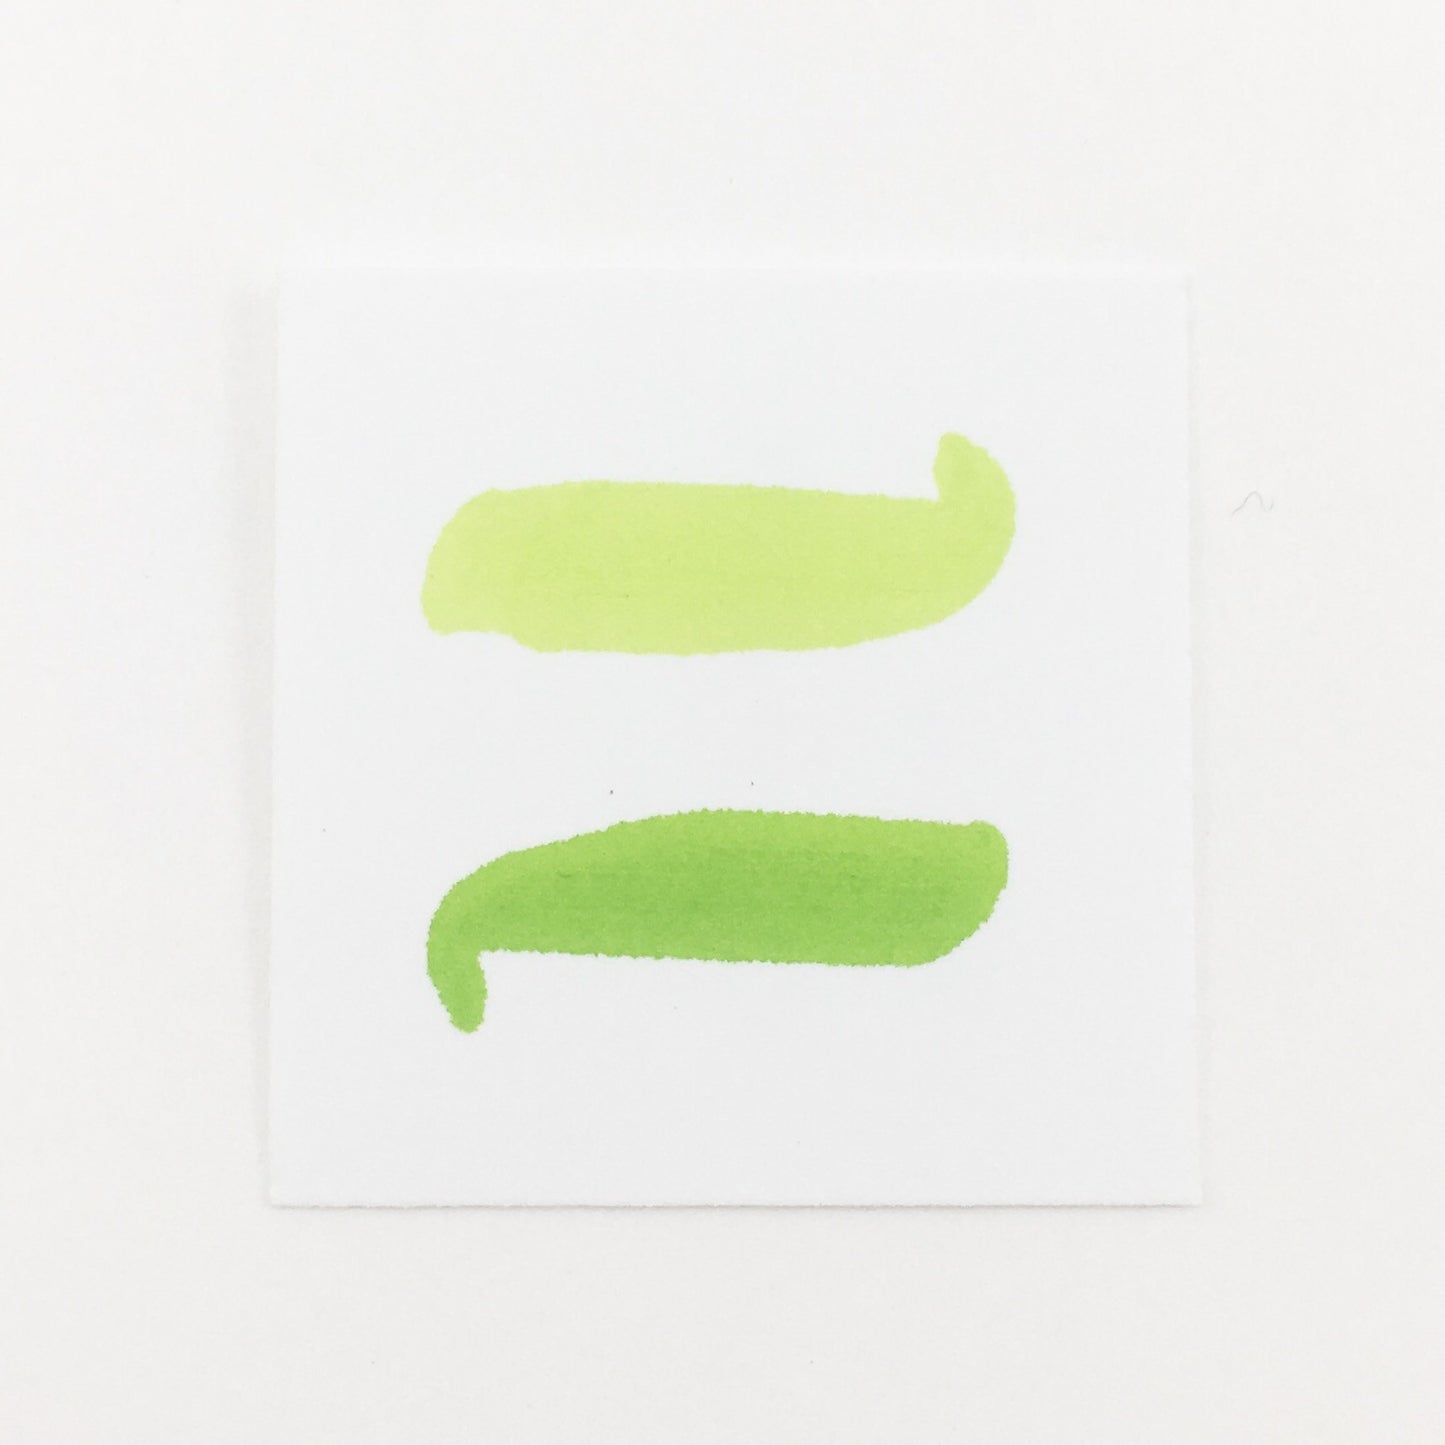 Kuretake Zig "Brushables" Two-Tone Brush Markers - 045 - Cool Cucumber by Kuretake - K. A. Artist Shop